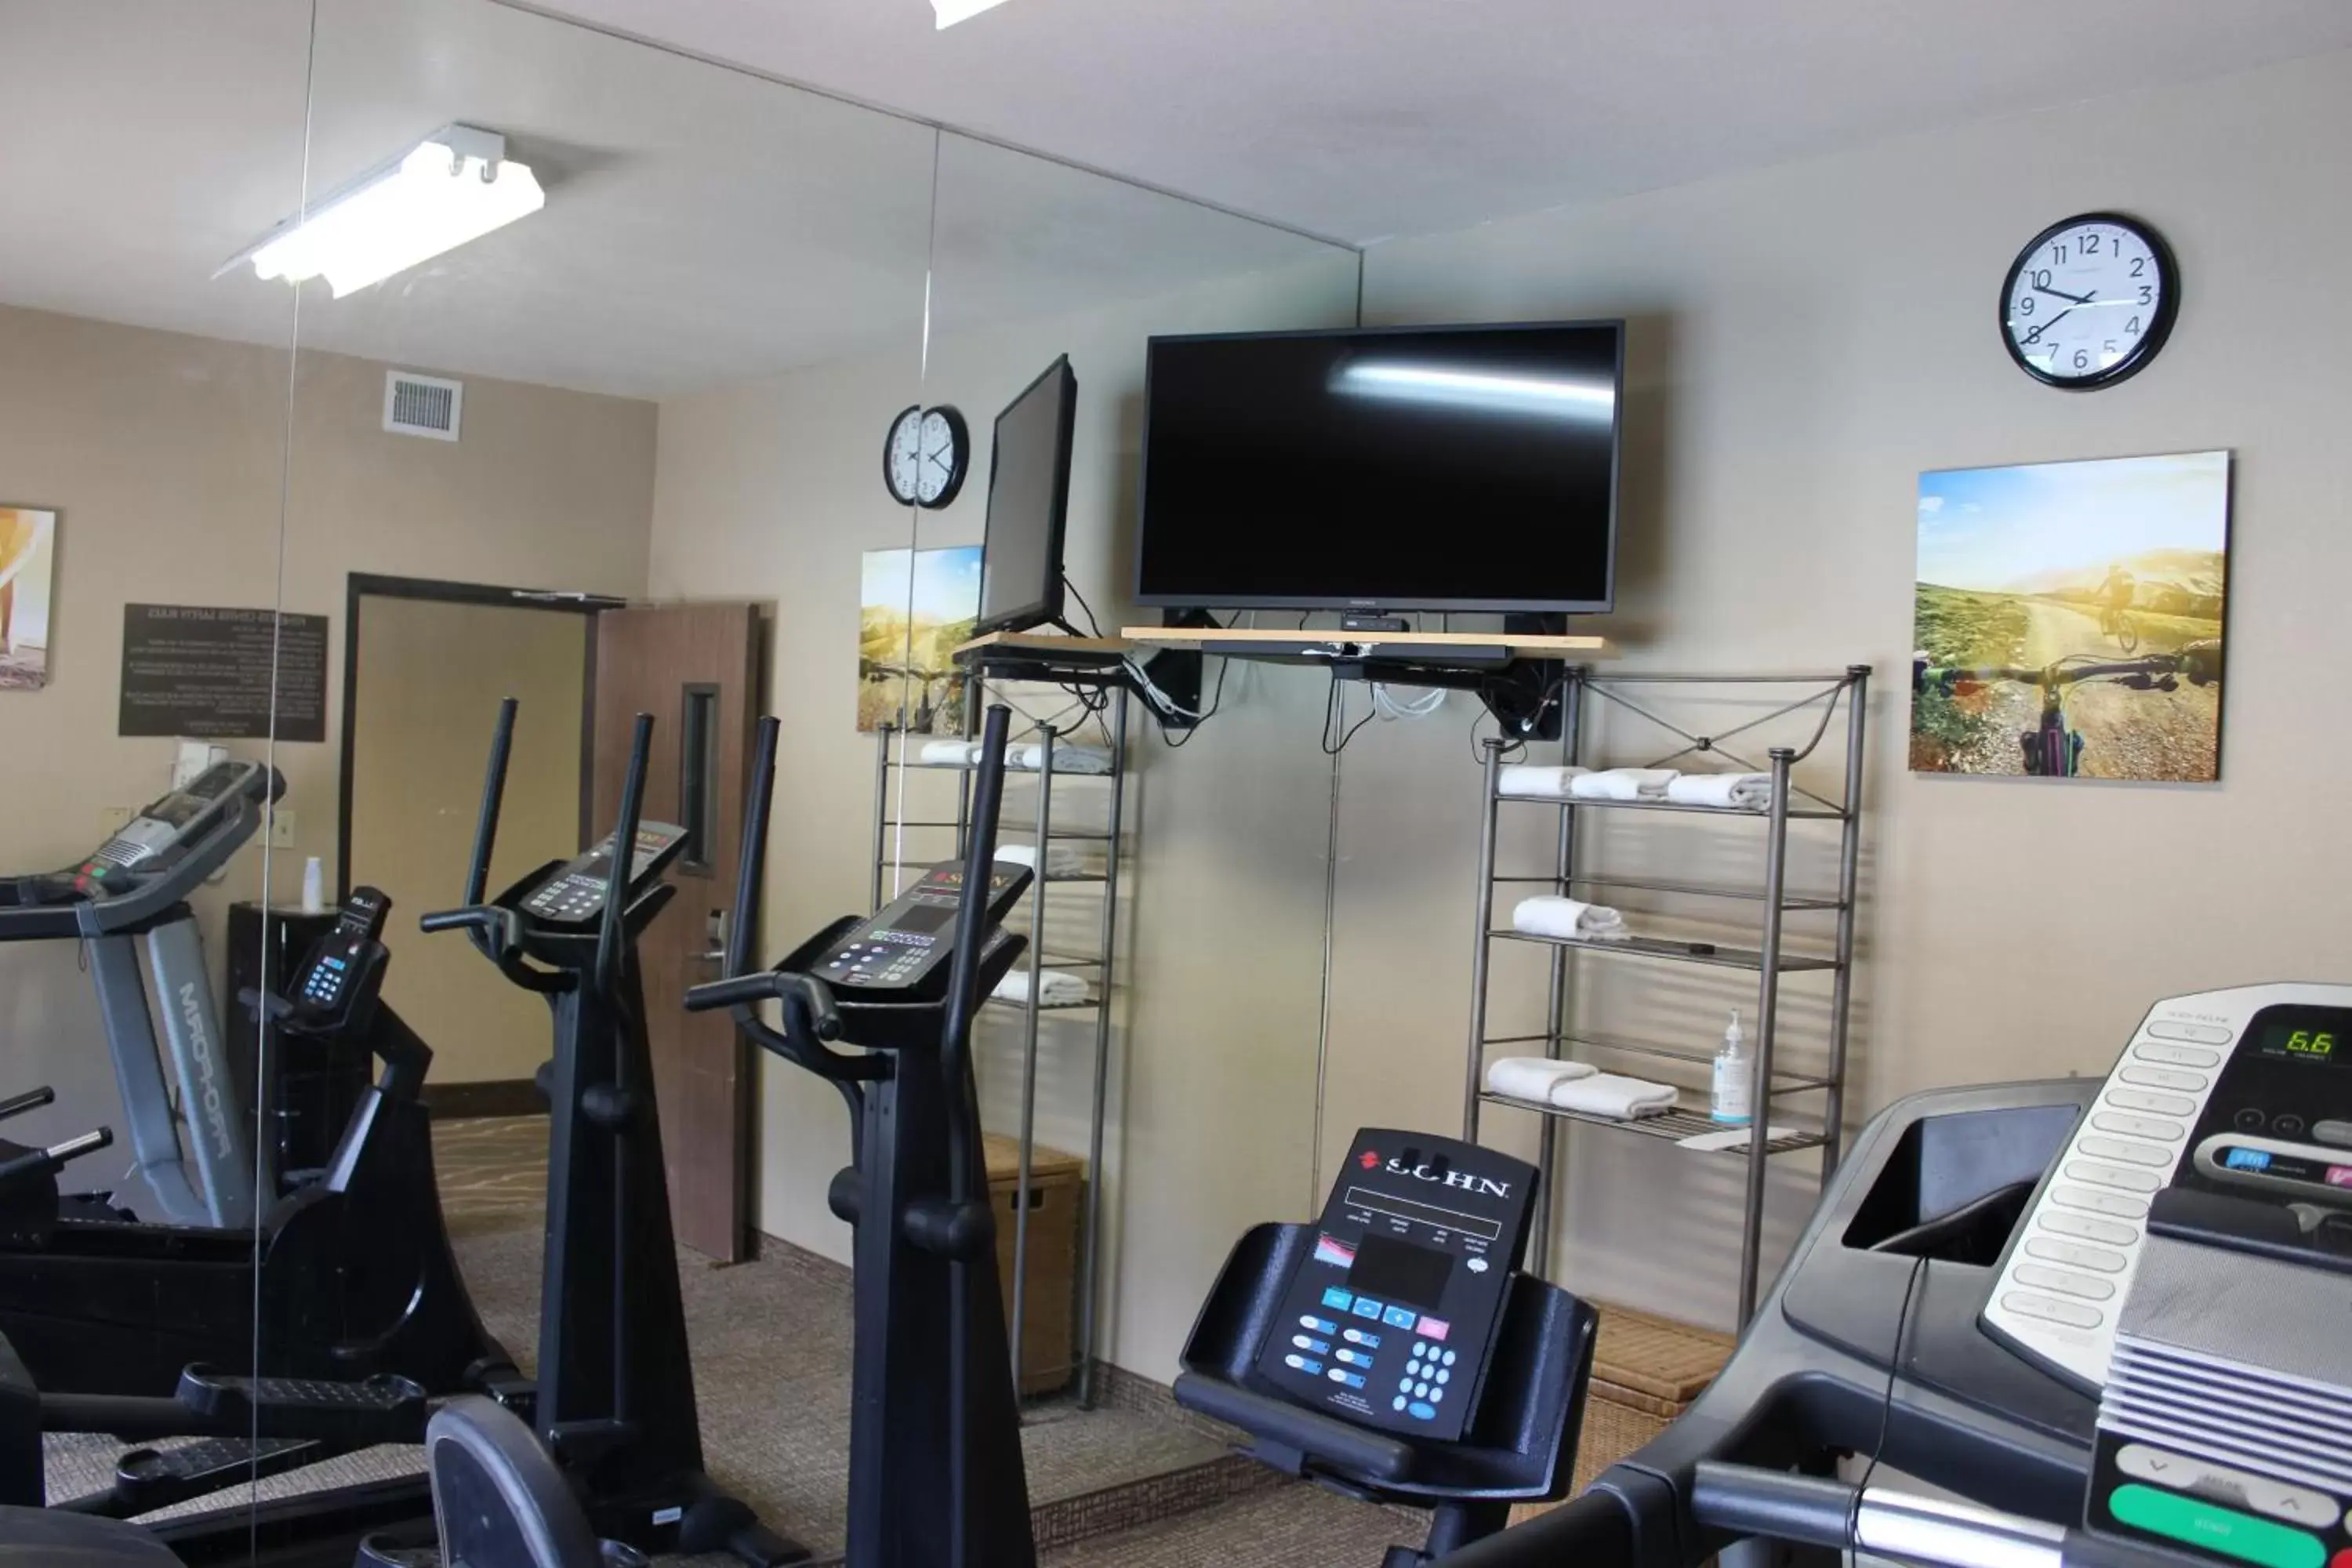 Fitness centre/facilities, Fitness Center/Facilities in Comfort Inn Green Valley I-19